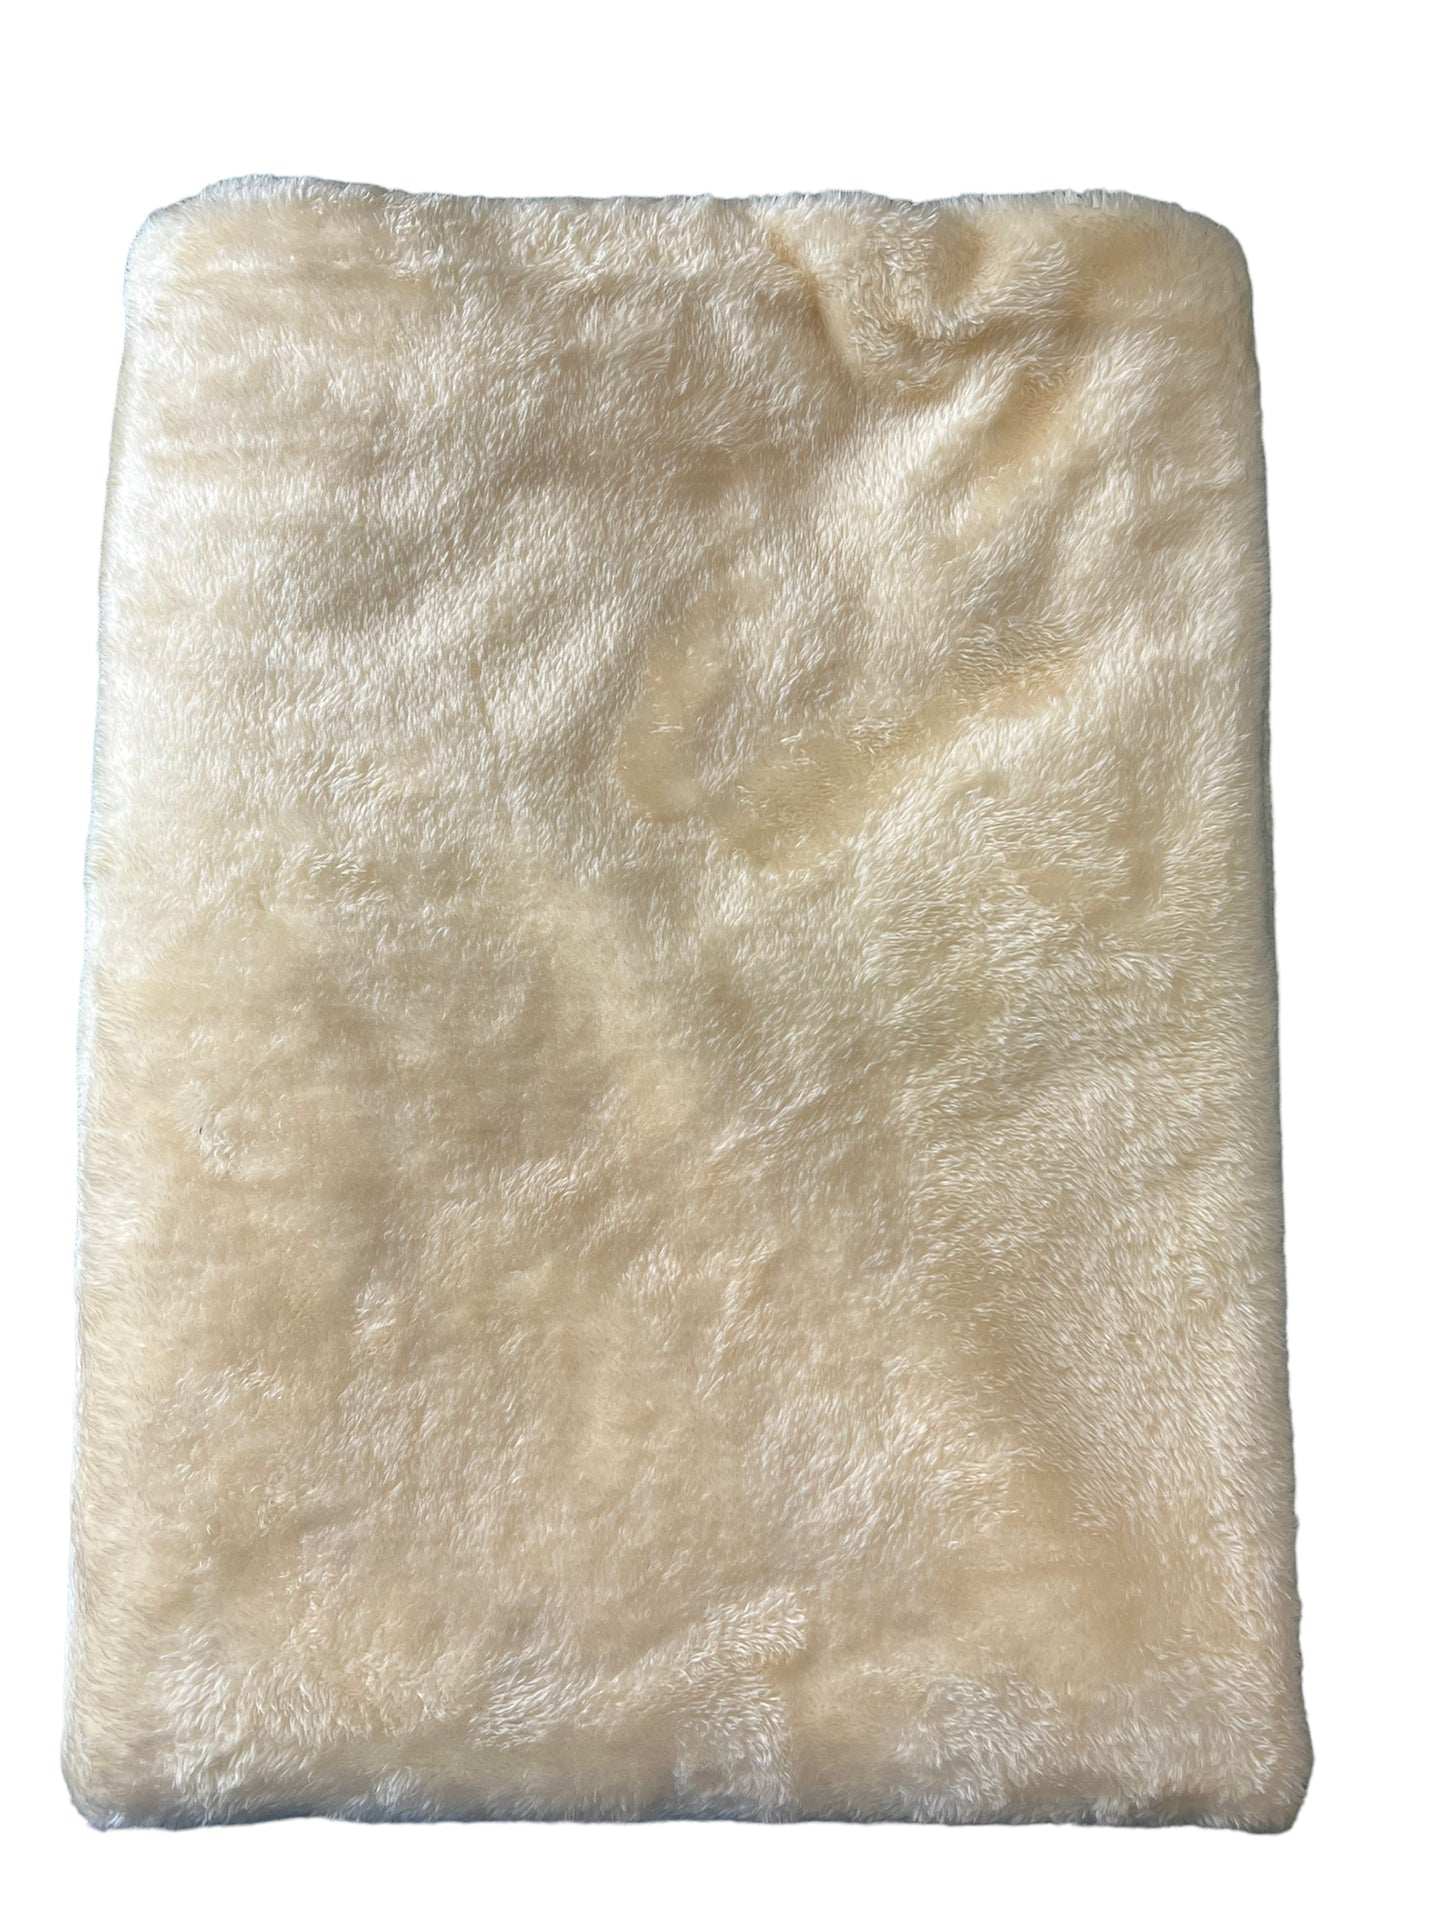 Minky Blanket - Cream Minky Fleece Backing